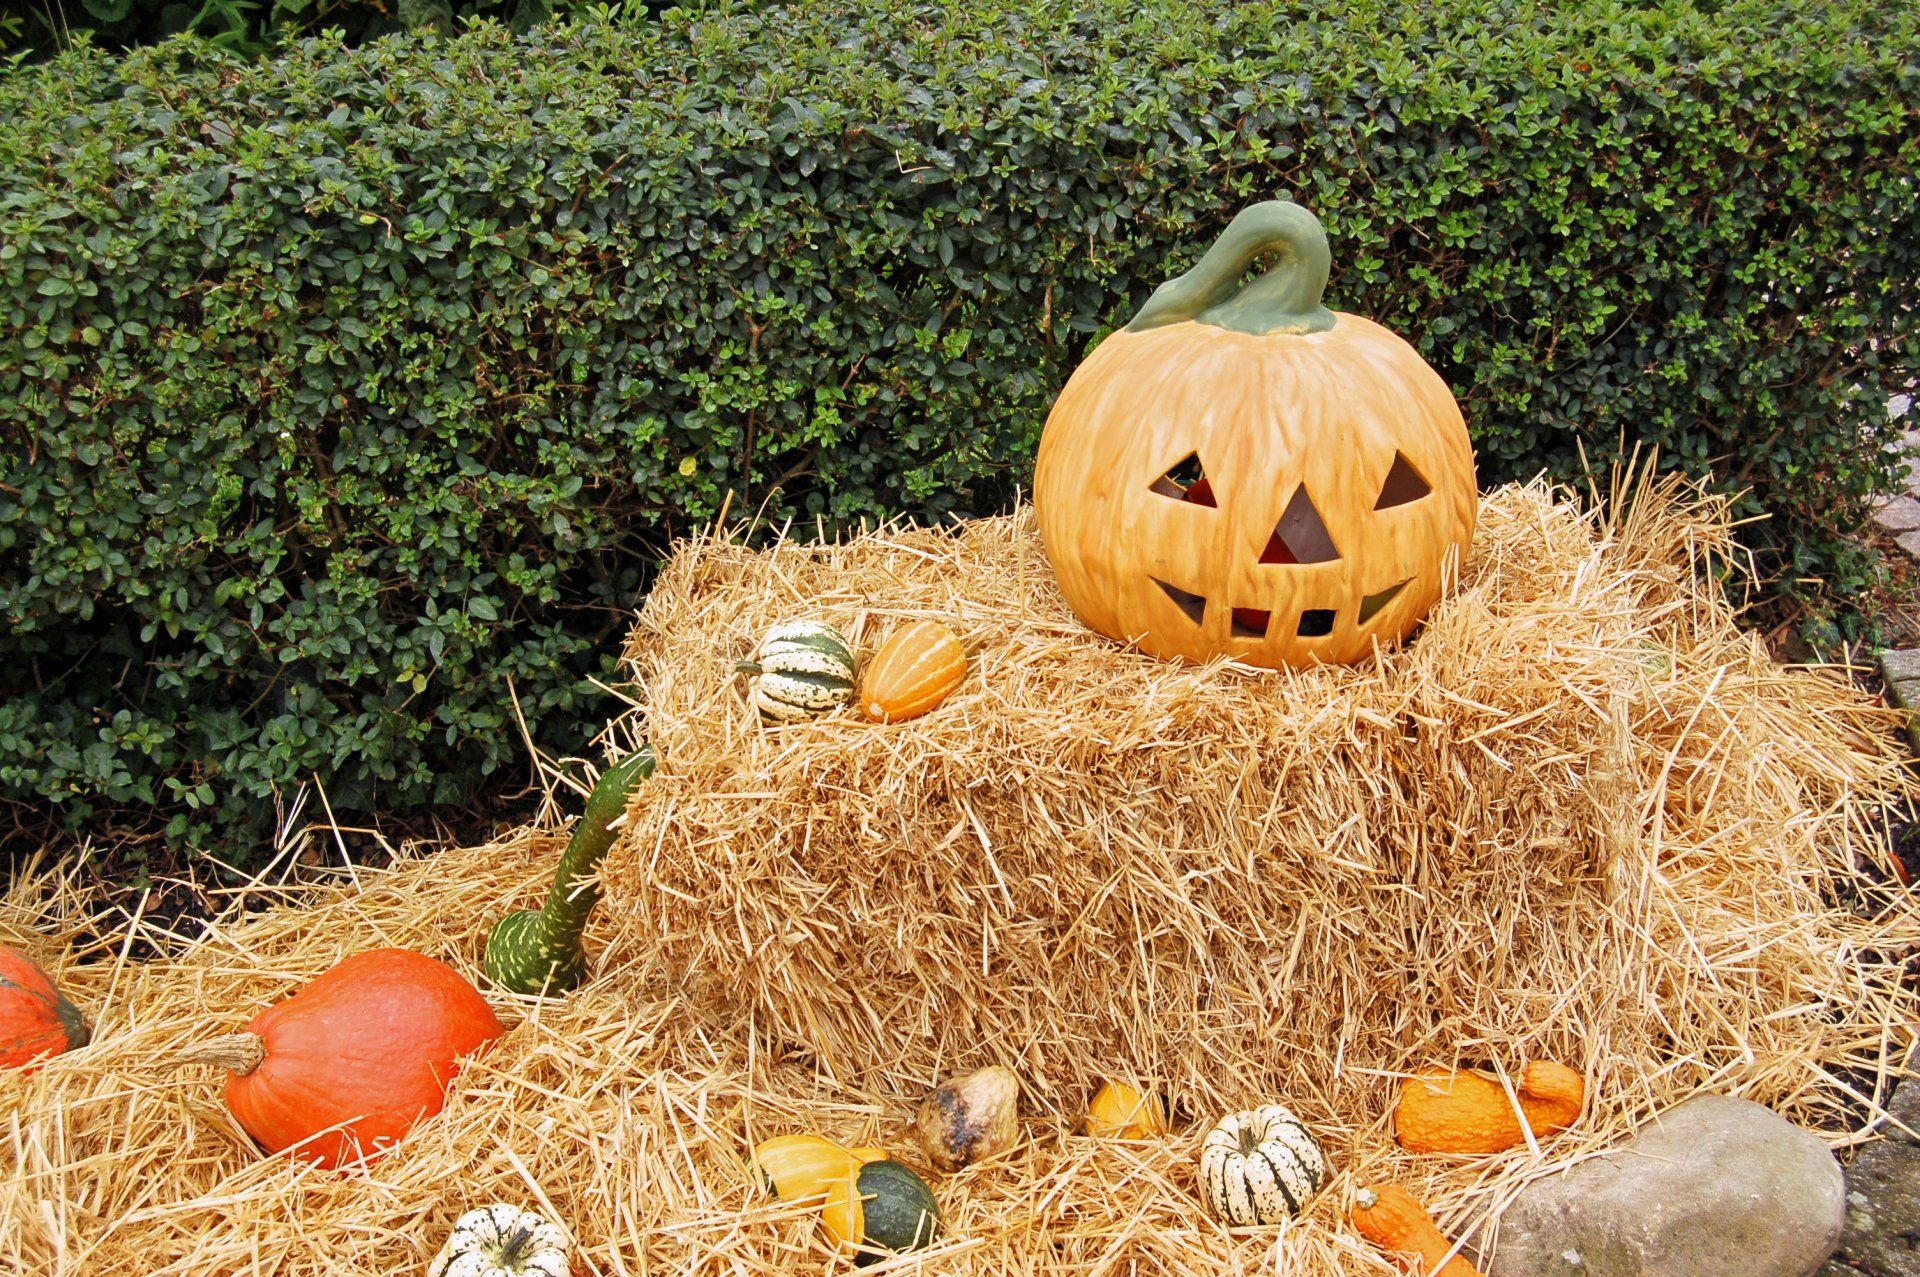 carved pumpkin sitting on hay